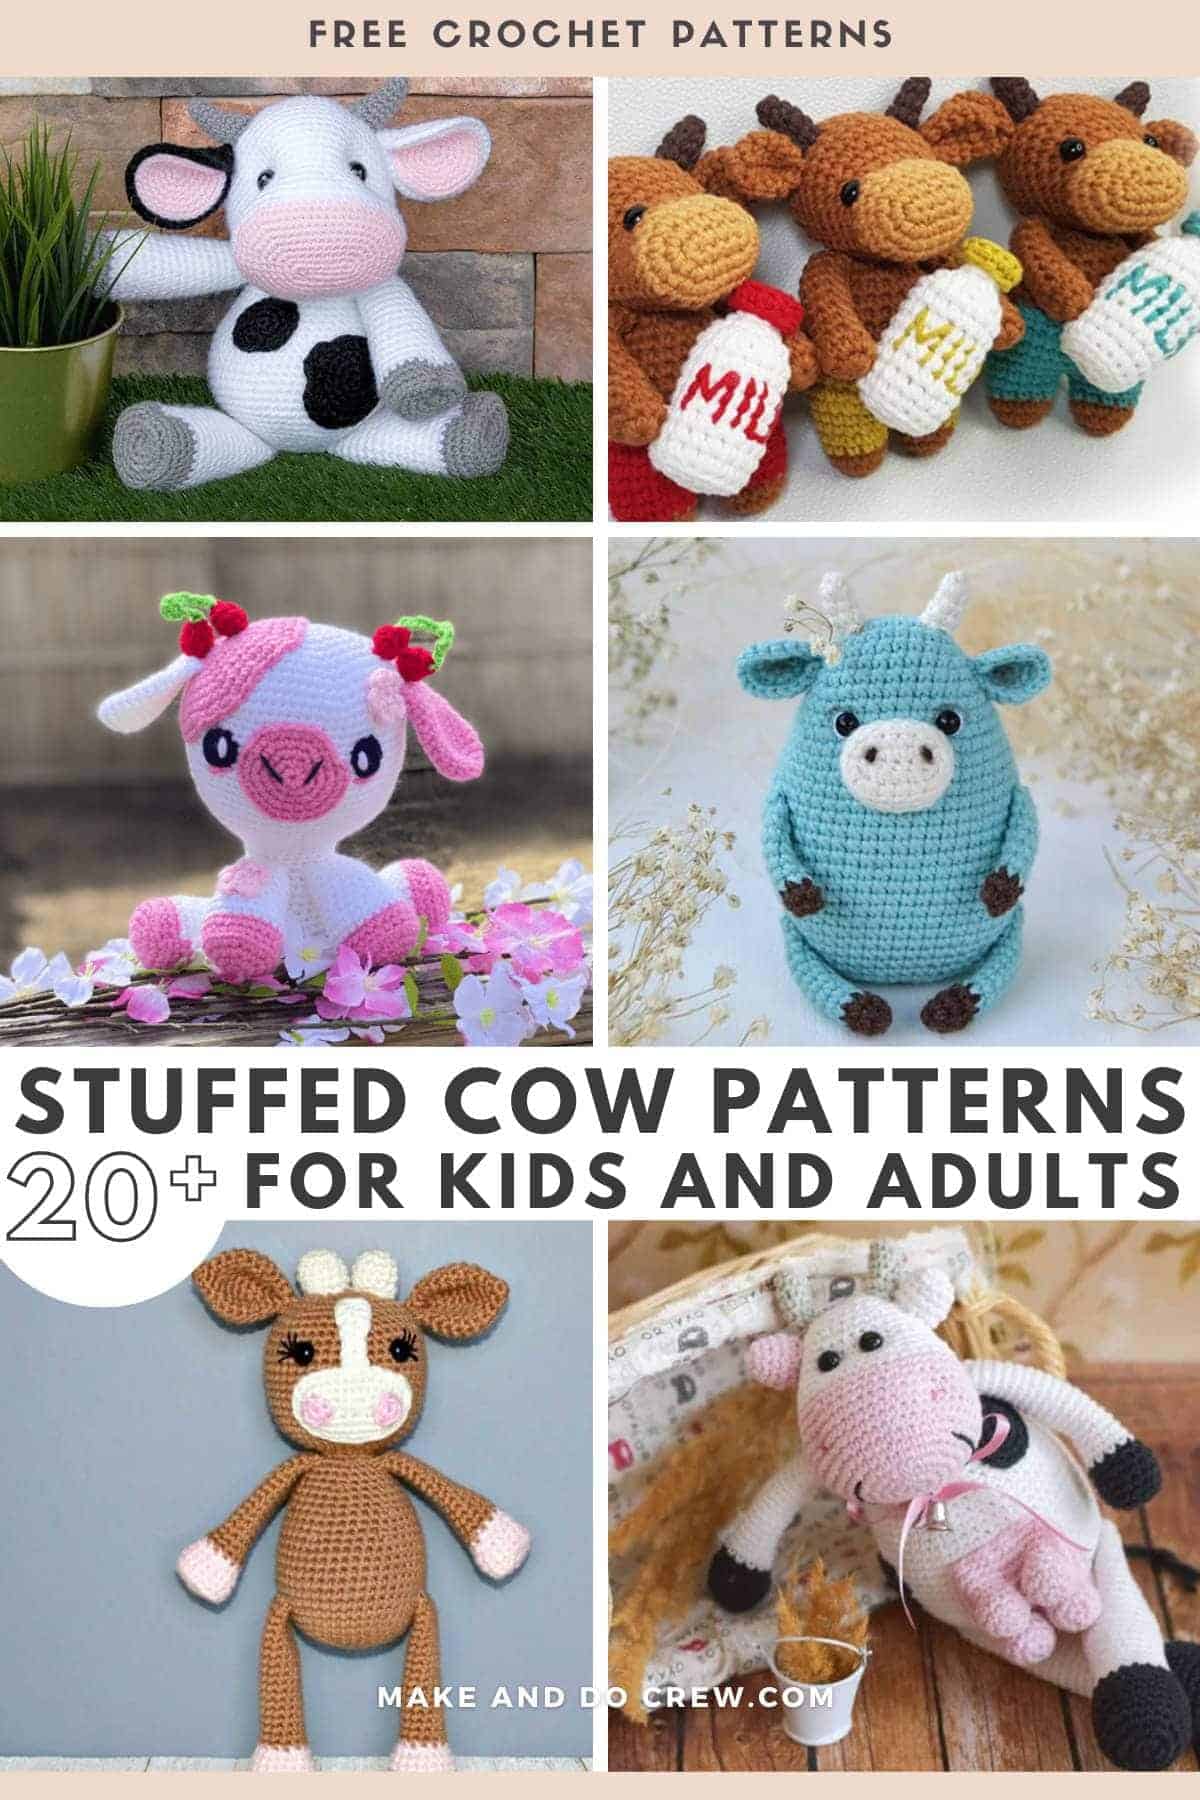 A grid of crochet stuffed cow toys.